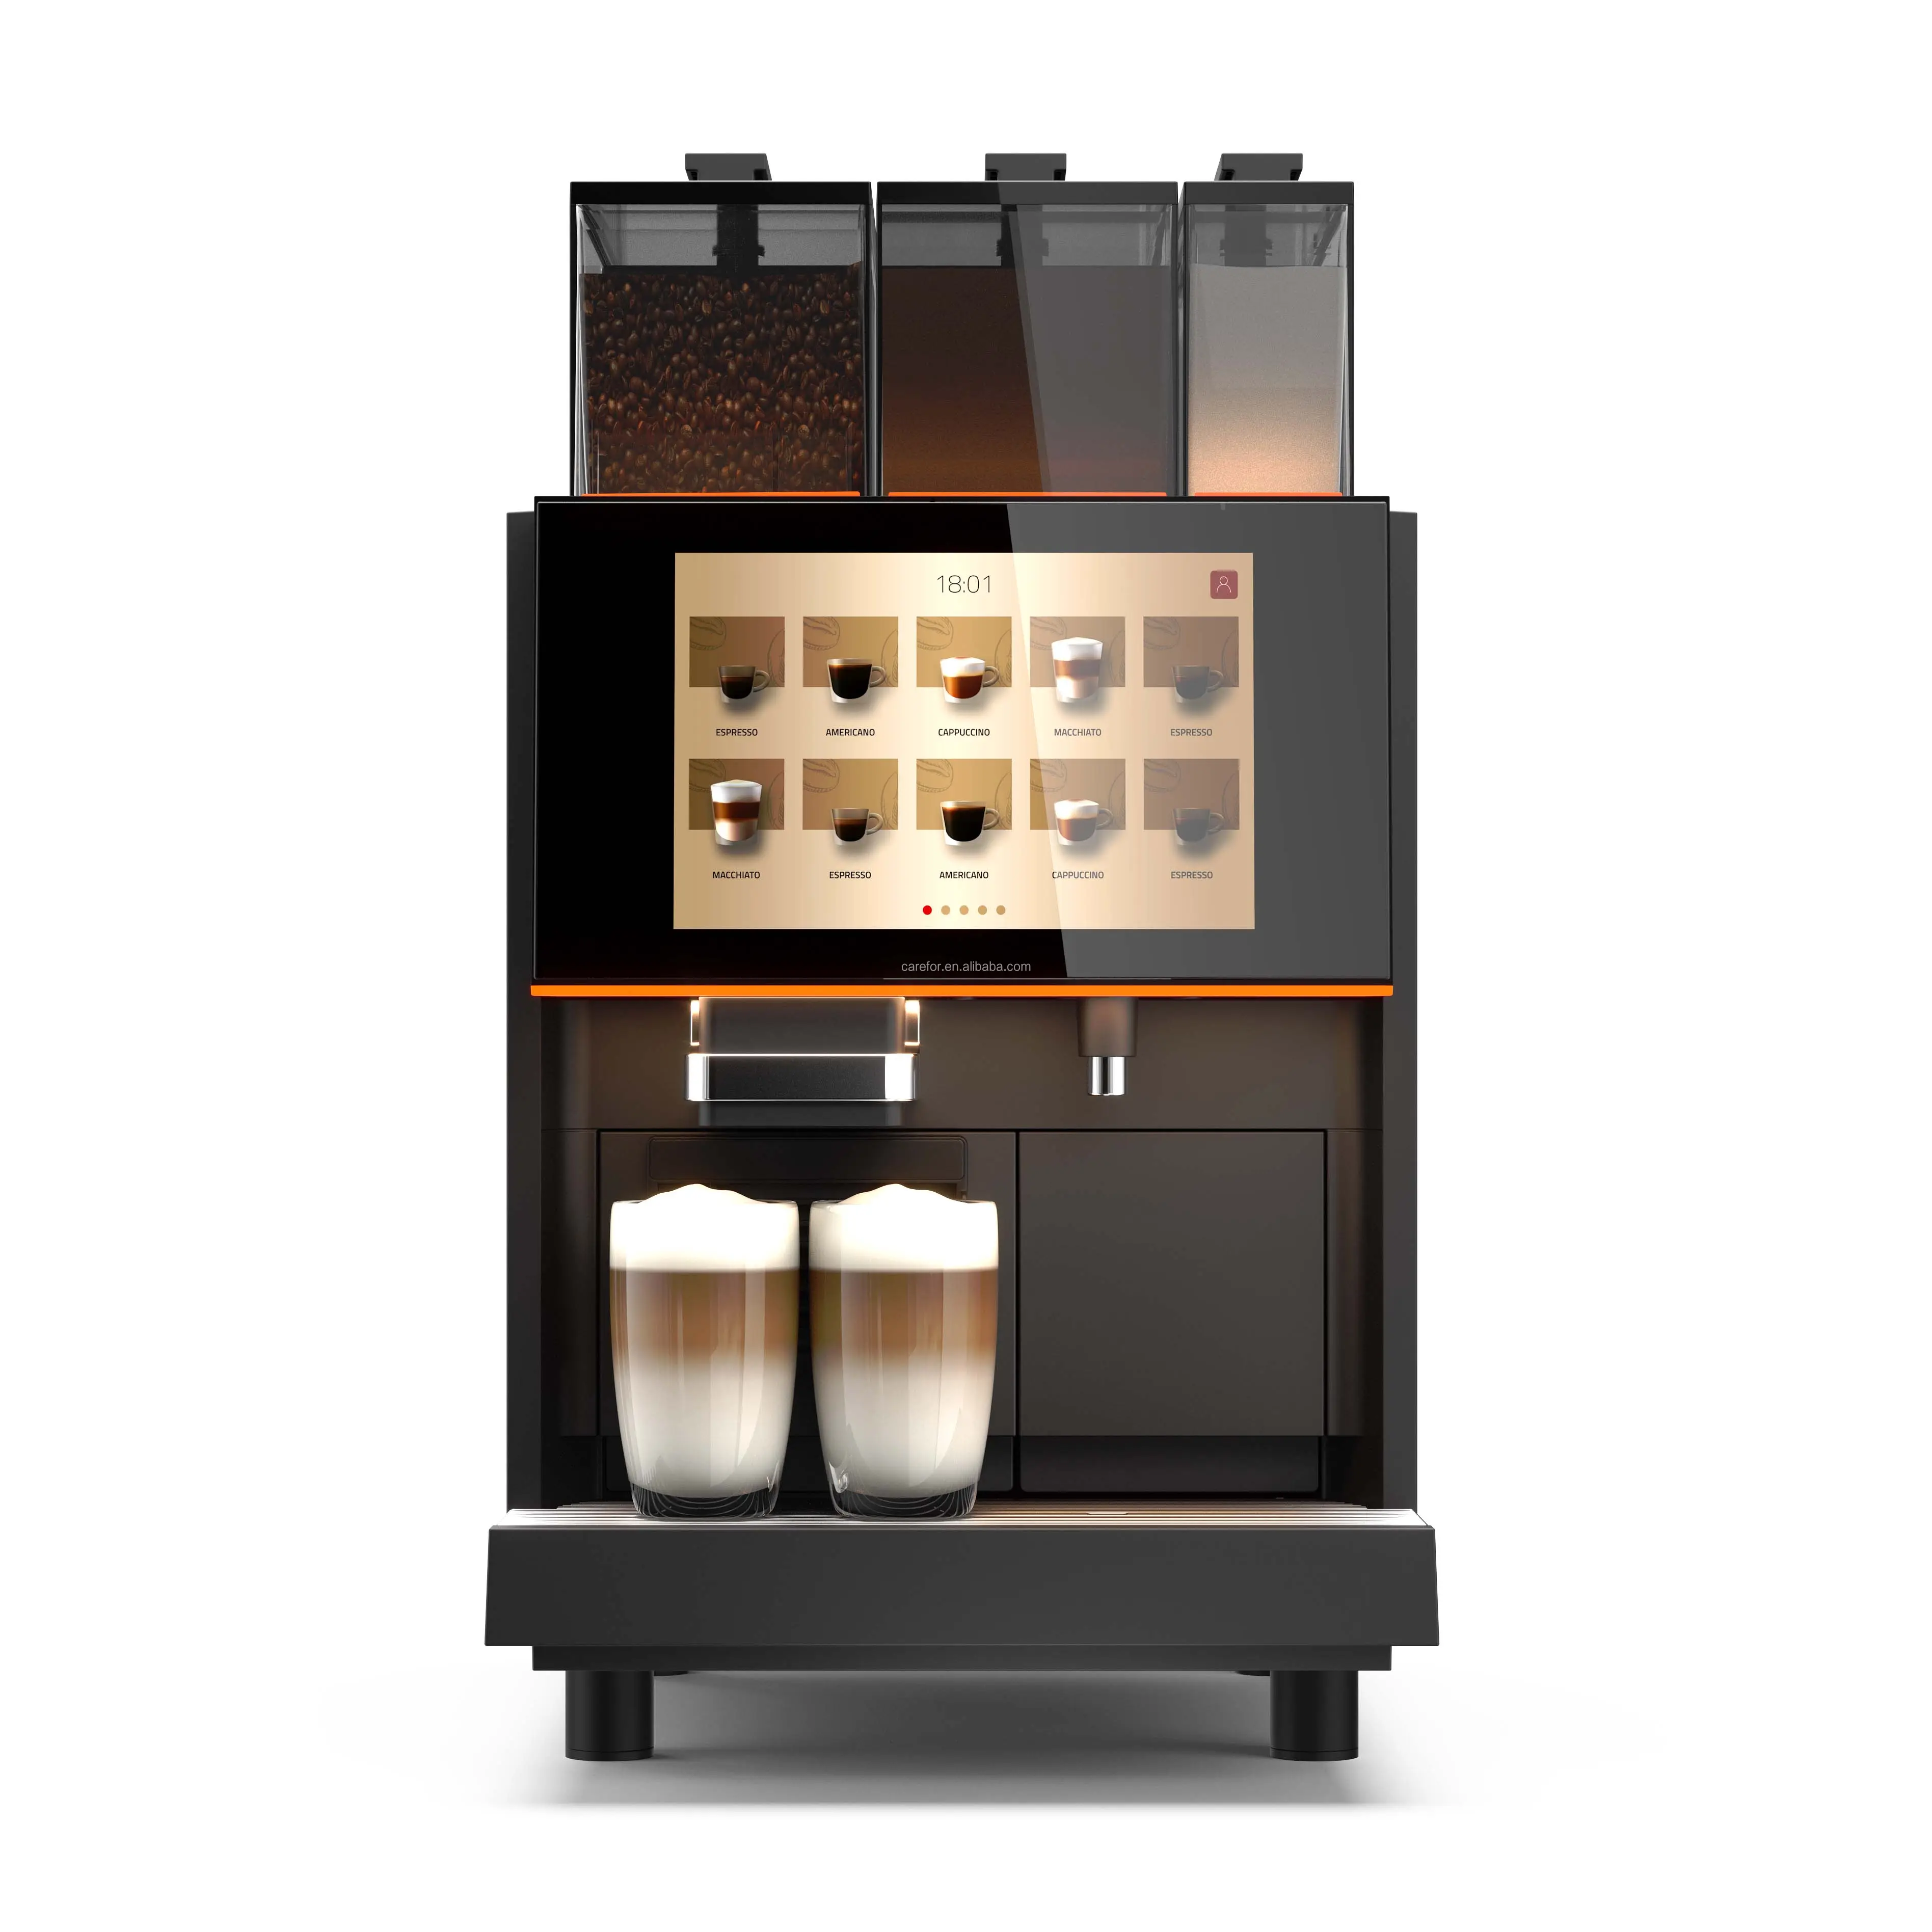 बिक्री के लिए पूरी तरह से स्वचालित एस्प्रेसो मशीन ओरेकल टच कॉफी मशीन